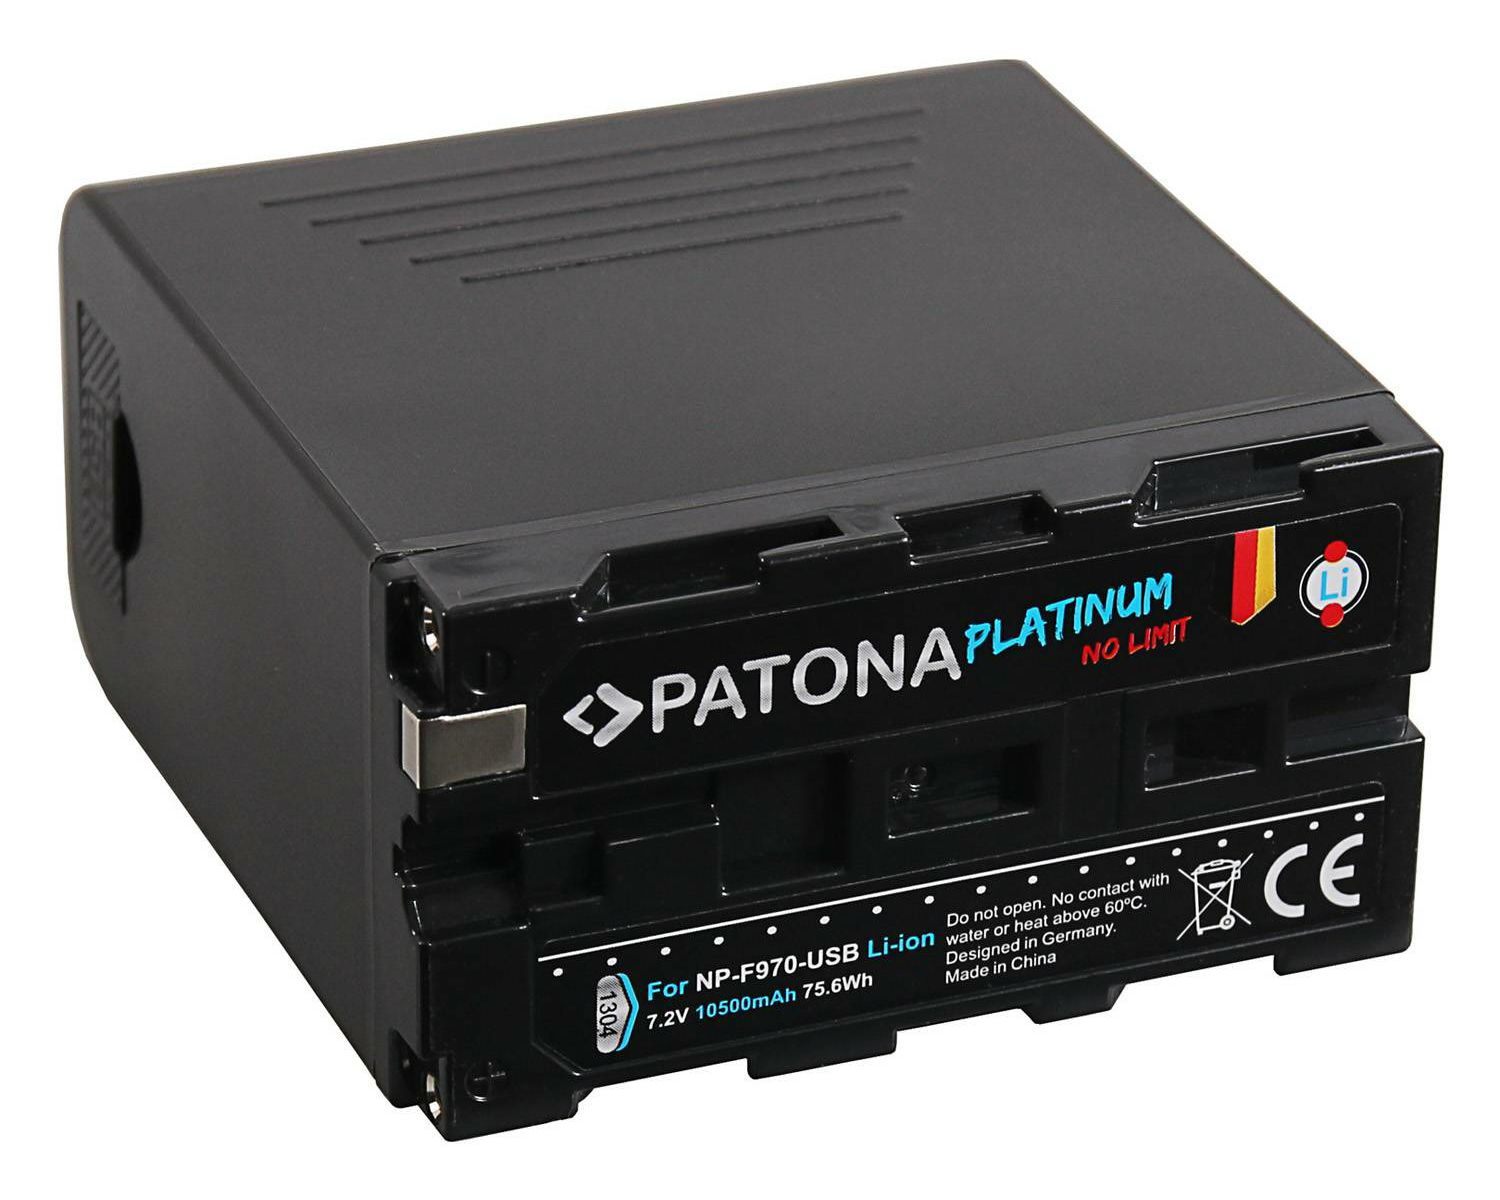 Patona NP-F970 Platinum 10500mAh 75.6Wh 7.2V baterija za Sony, Atomos, Aputure s NP-Fxxx prihvatom NP-F530, NP-F550, NP-F730, NP-F750, NP-F770, NP-F930, NP-F950, NP-F960, NP-F970, NP-F975, NP-F990